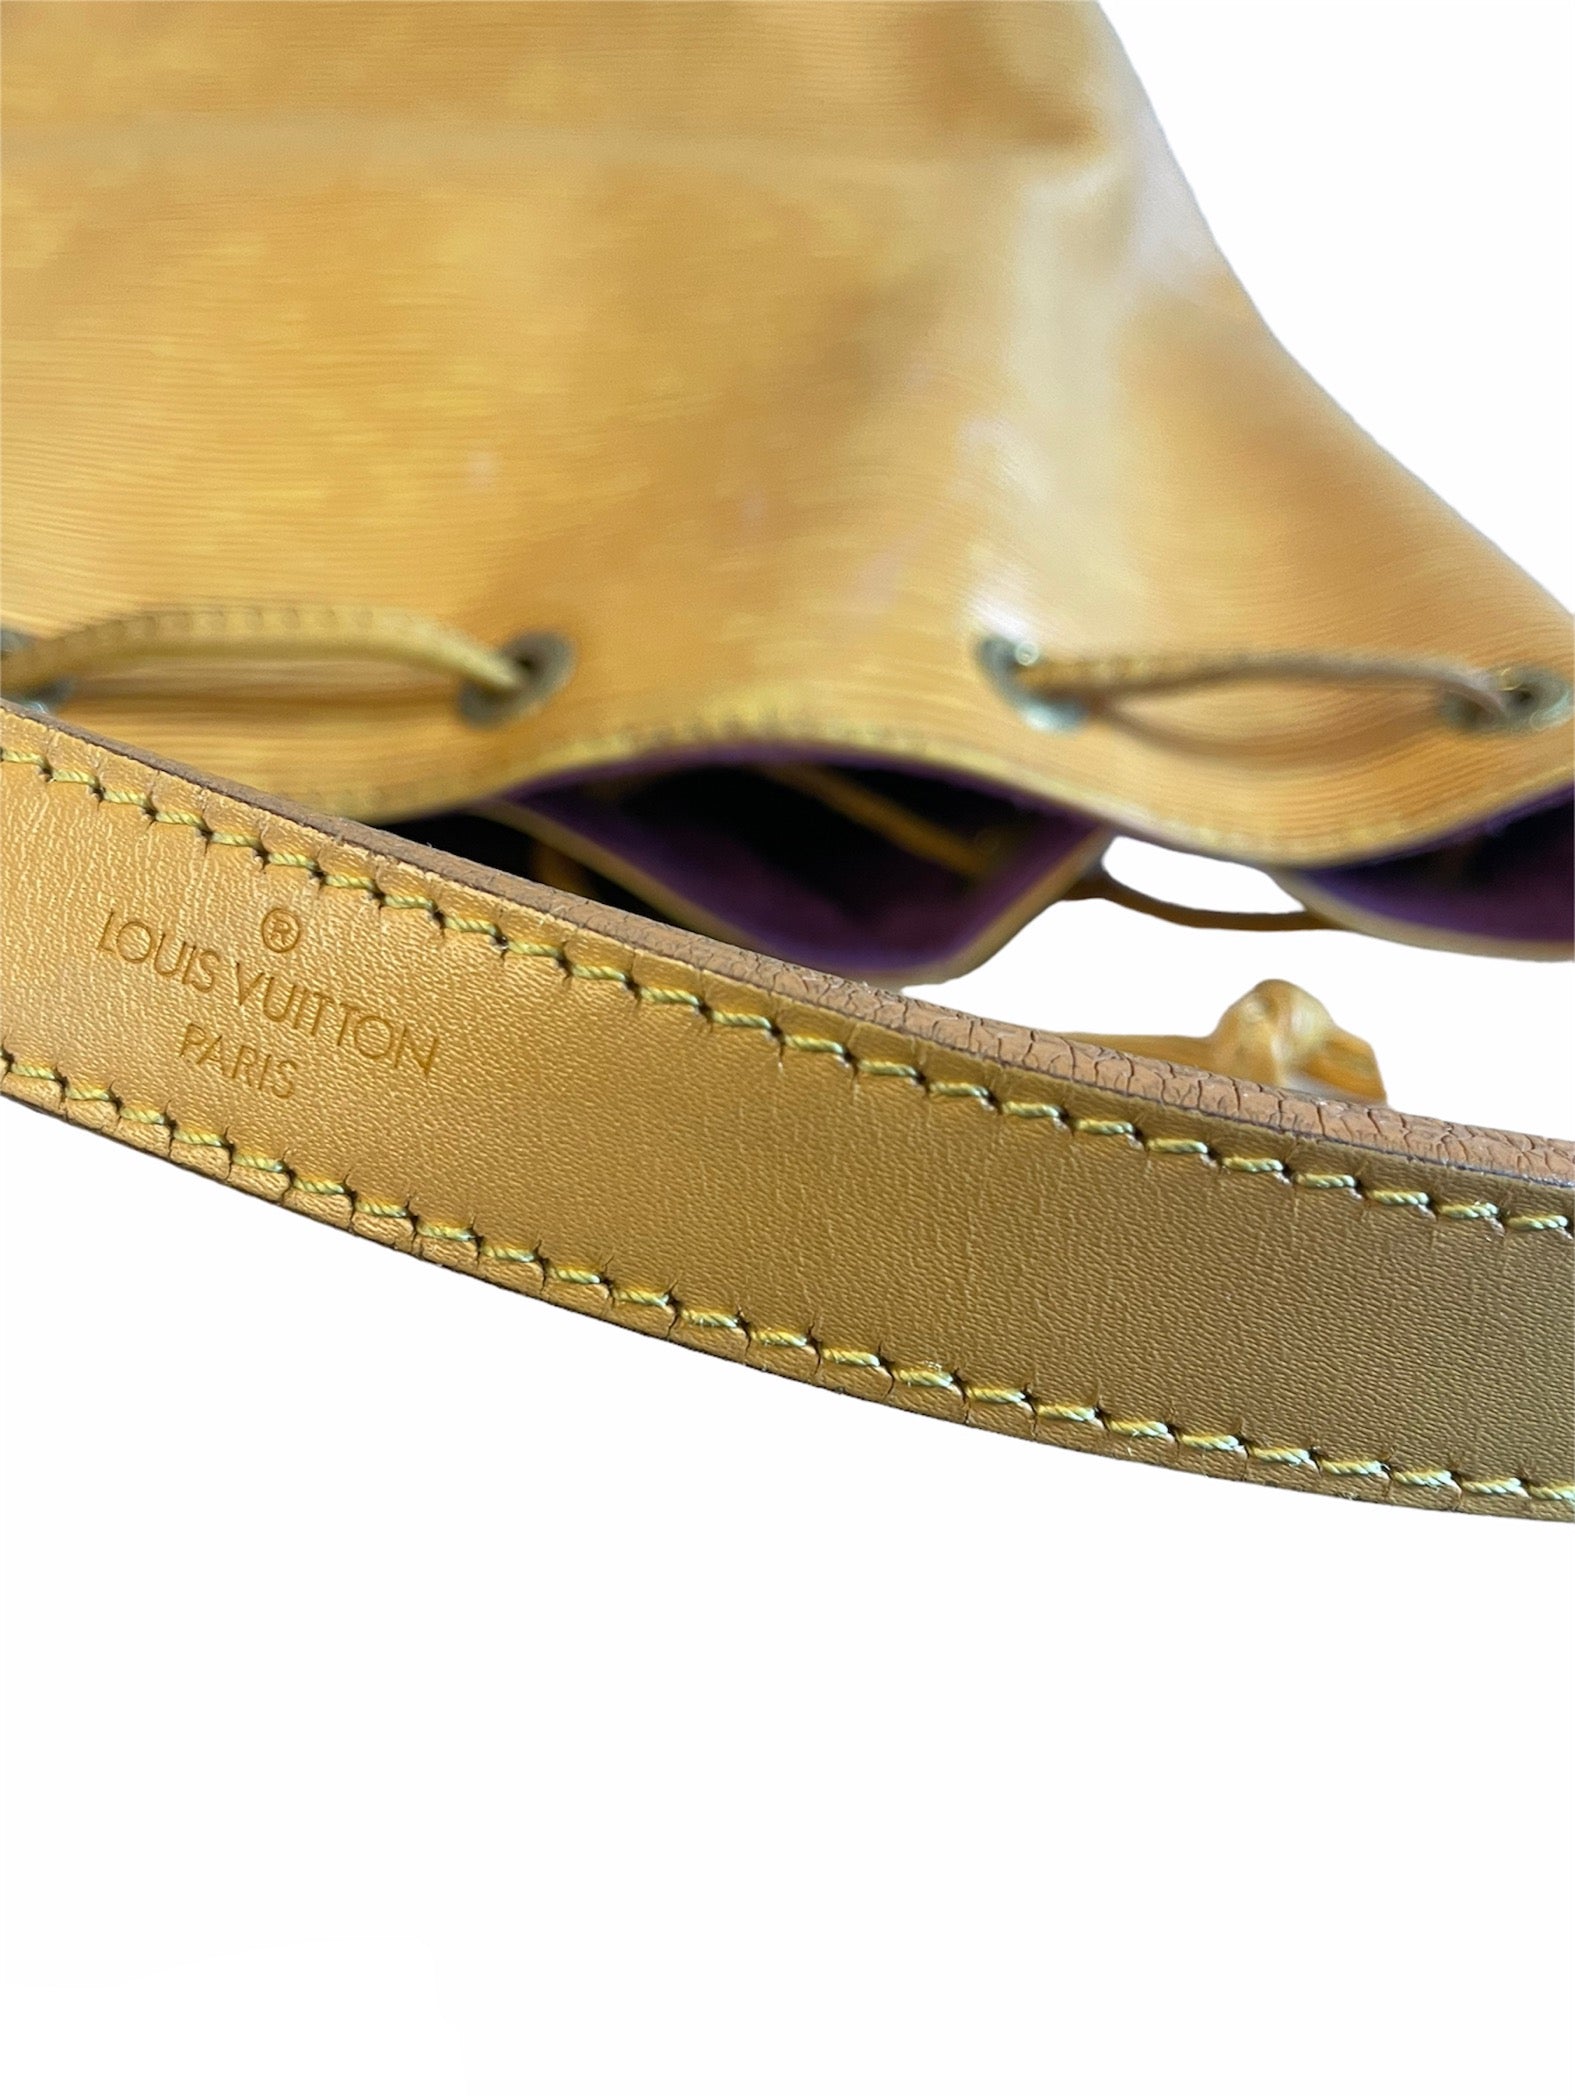 LOUIS VUITTON: Bucket Gm Noe Yellow Epi Leather Shoulder Bag